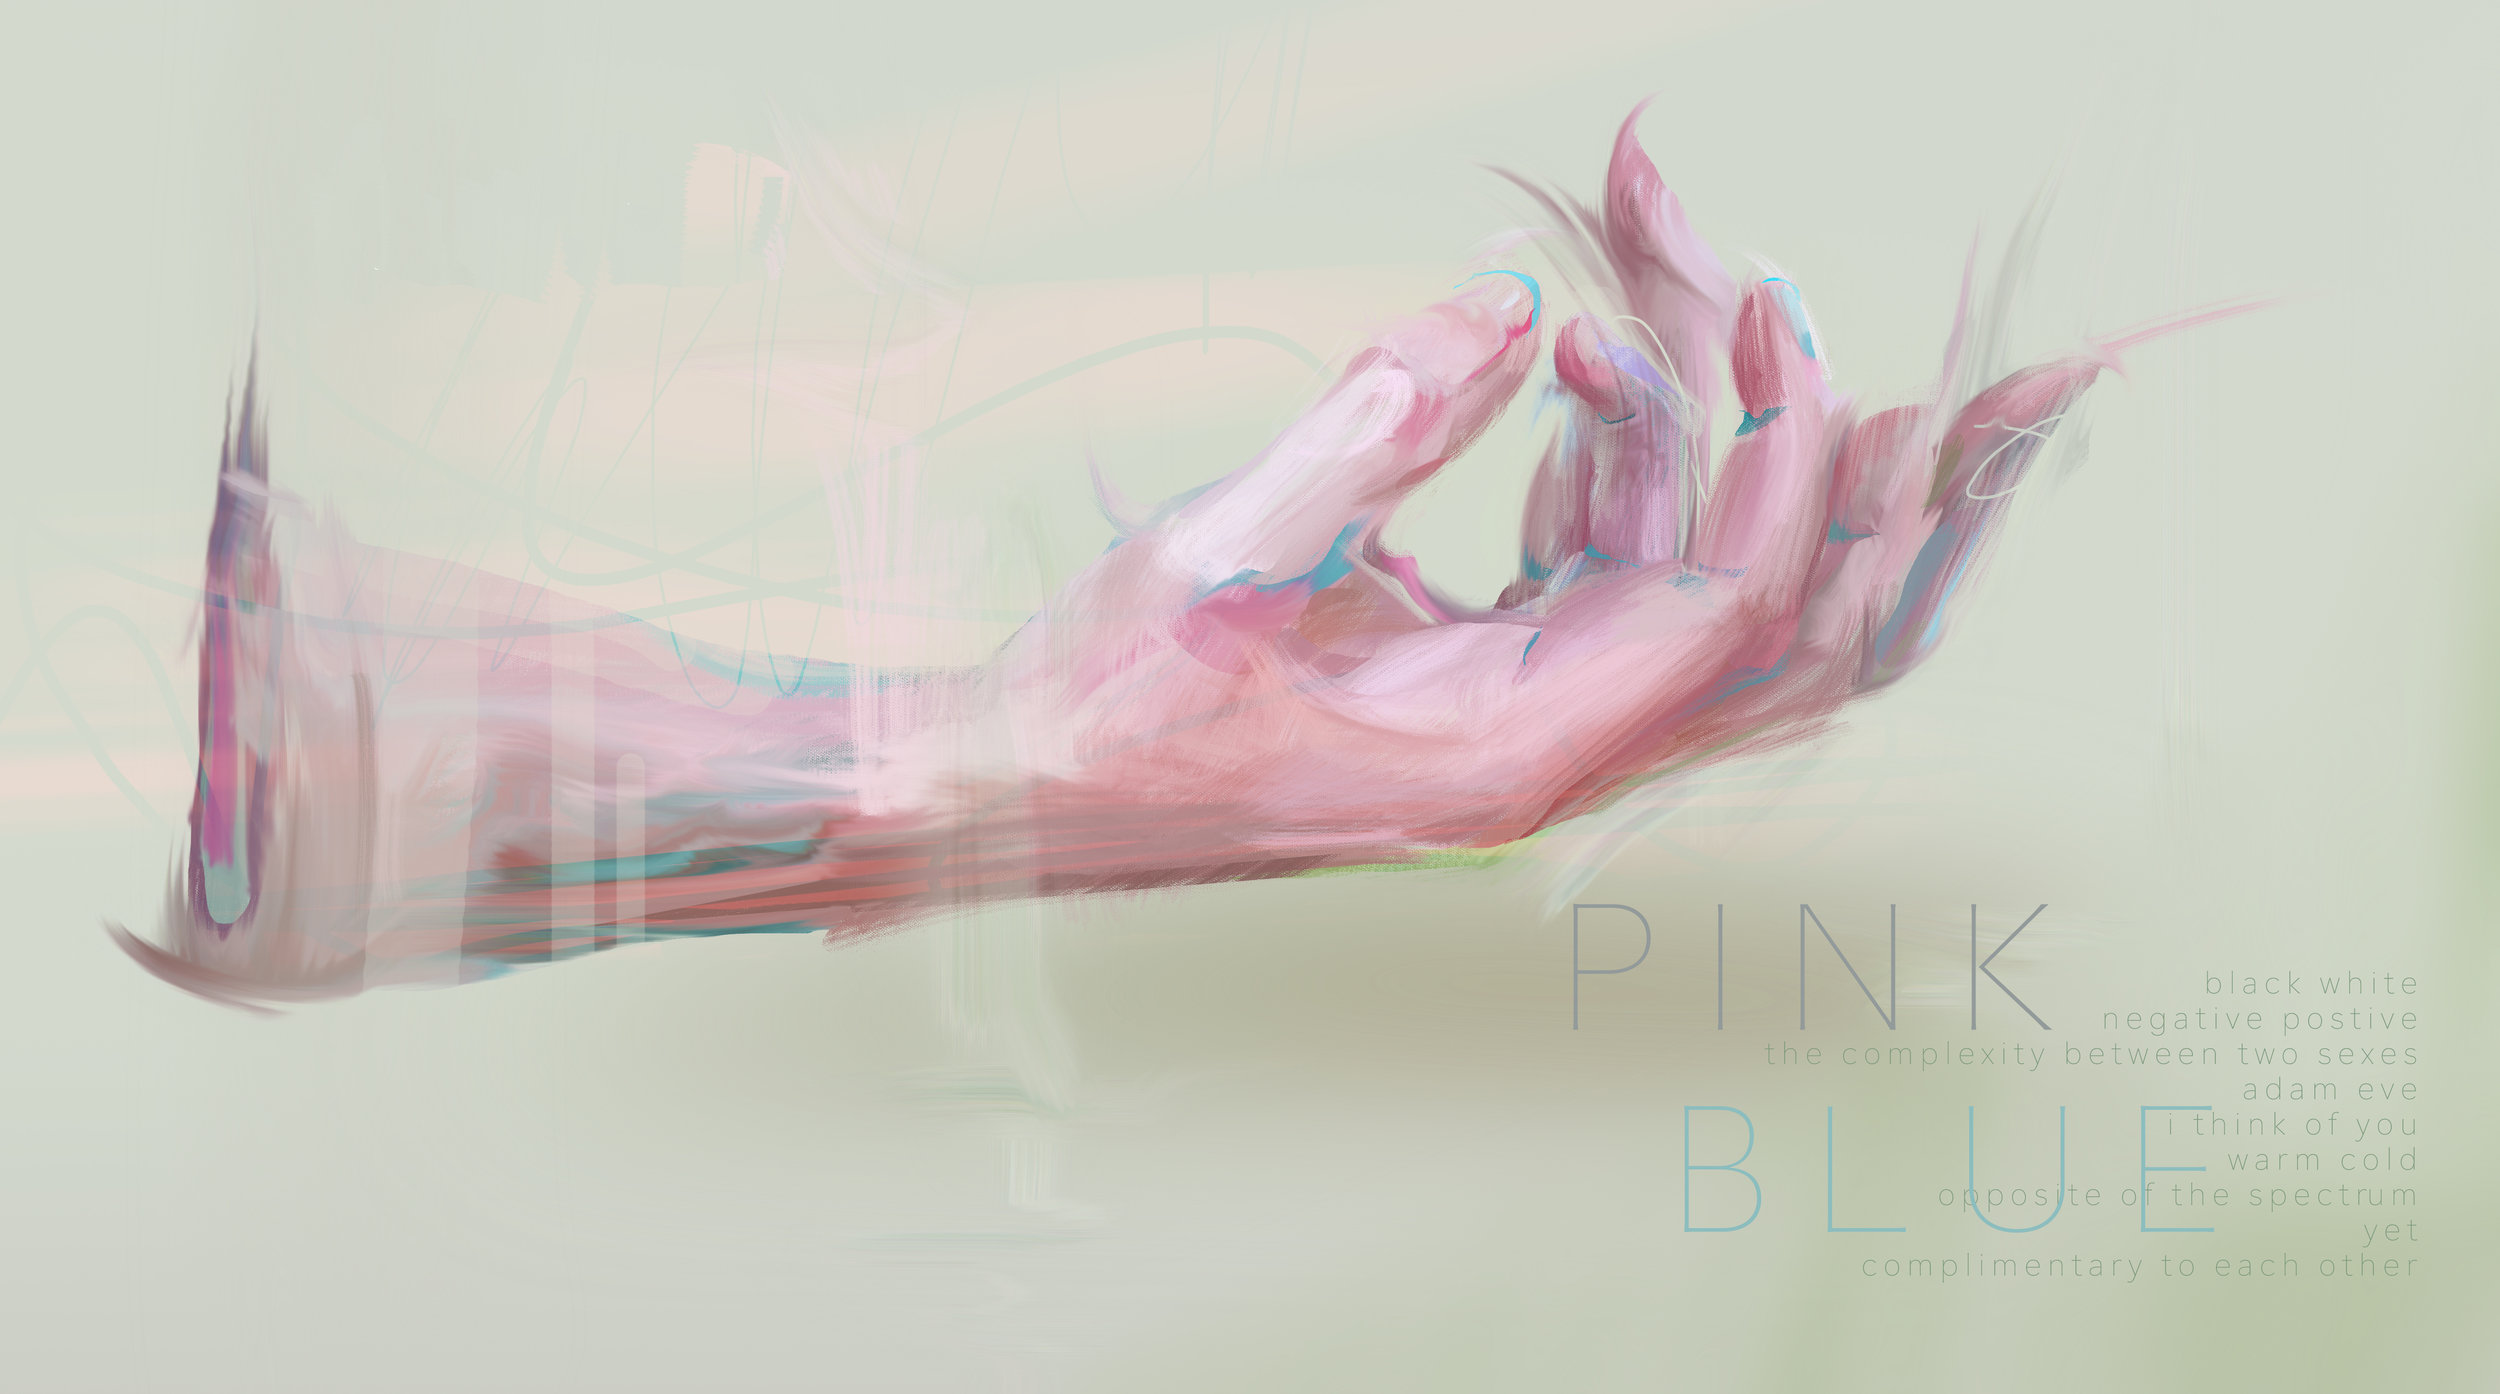 PINK BLUE exhibition